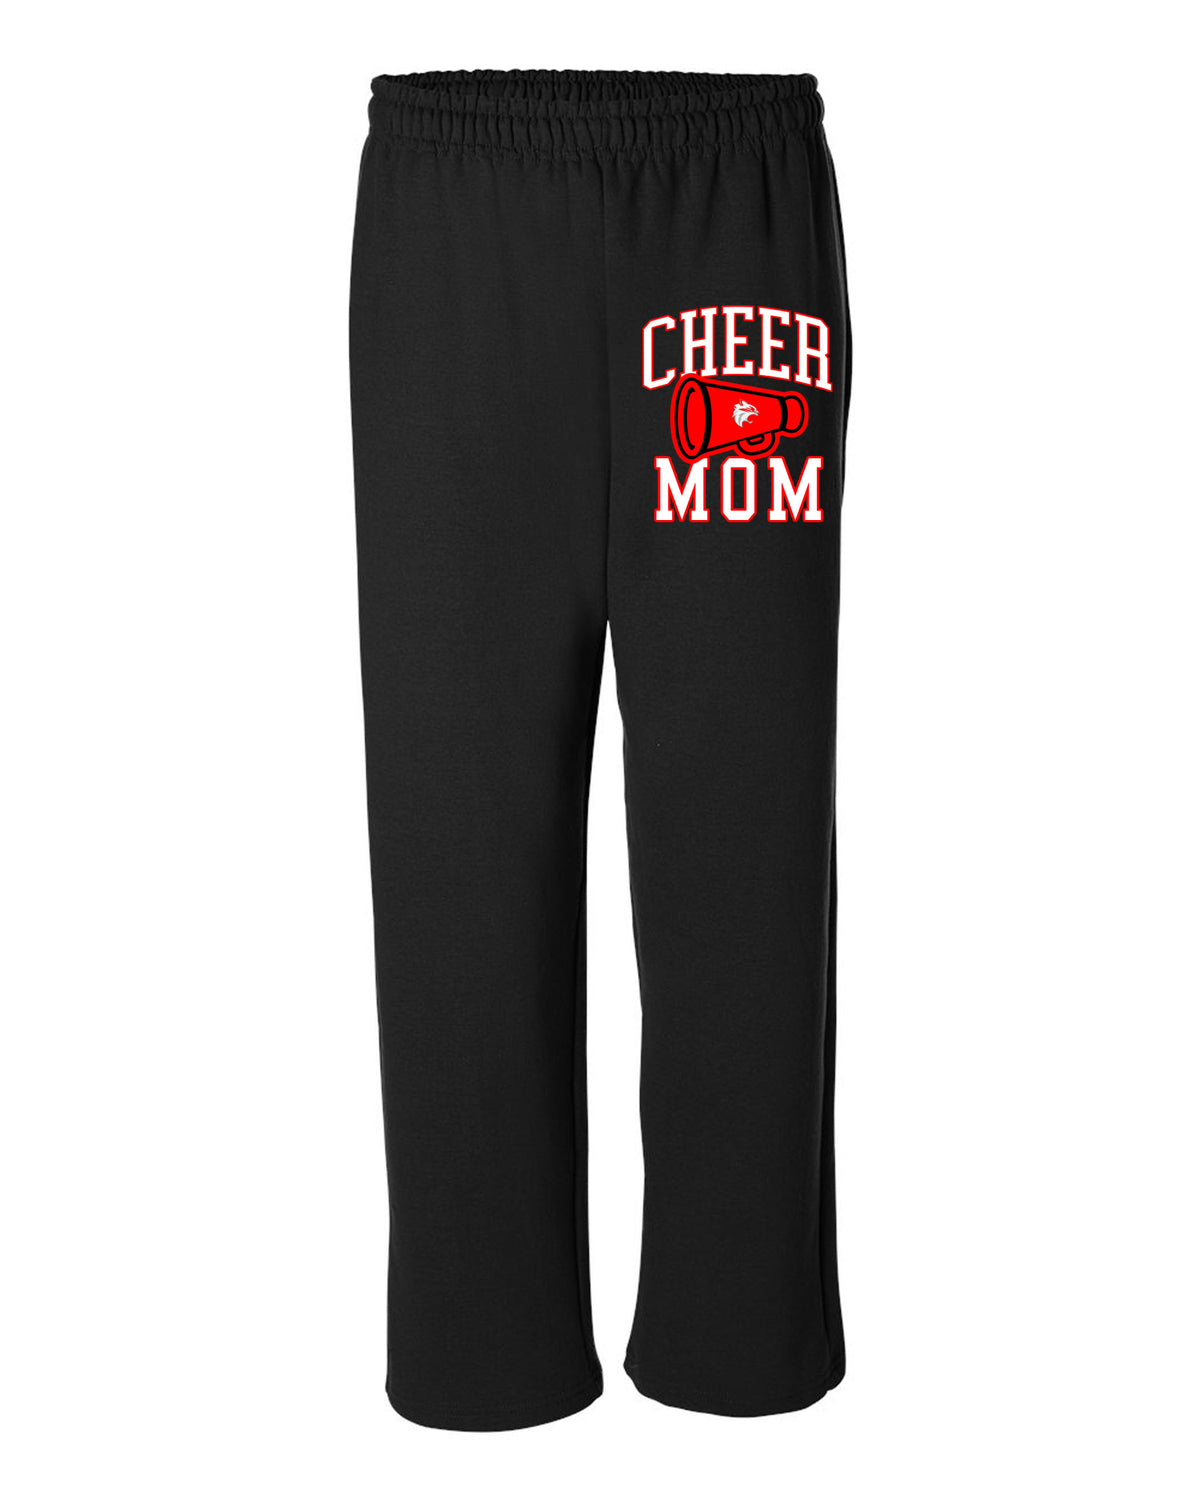 High Point Cheer Design 7 Open Bottom Sweatpants